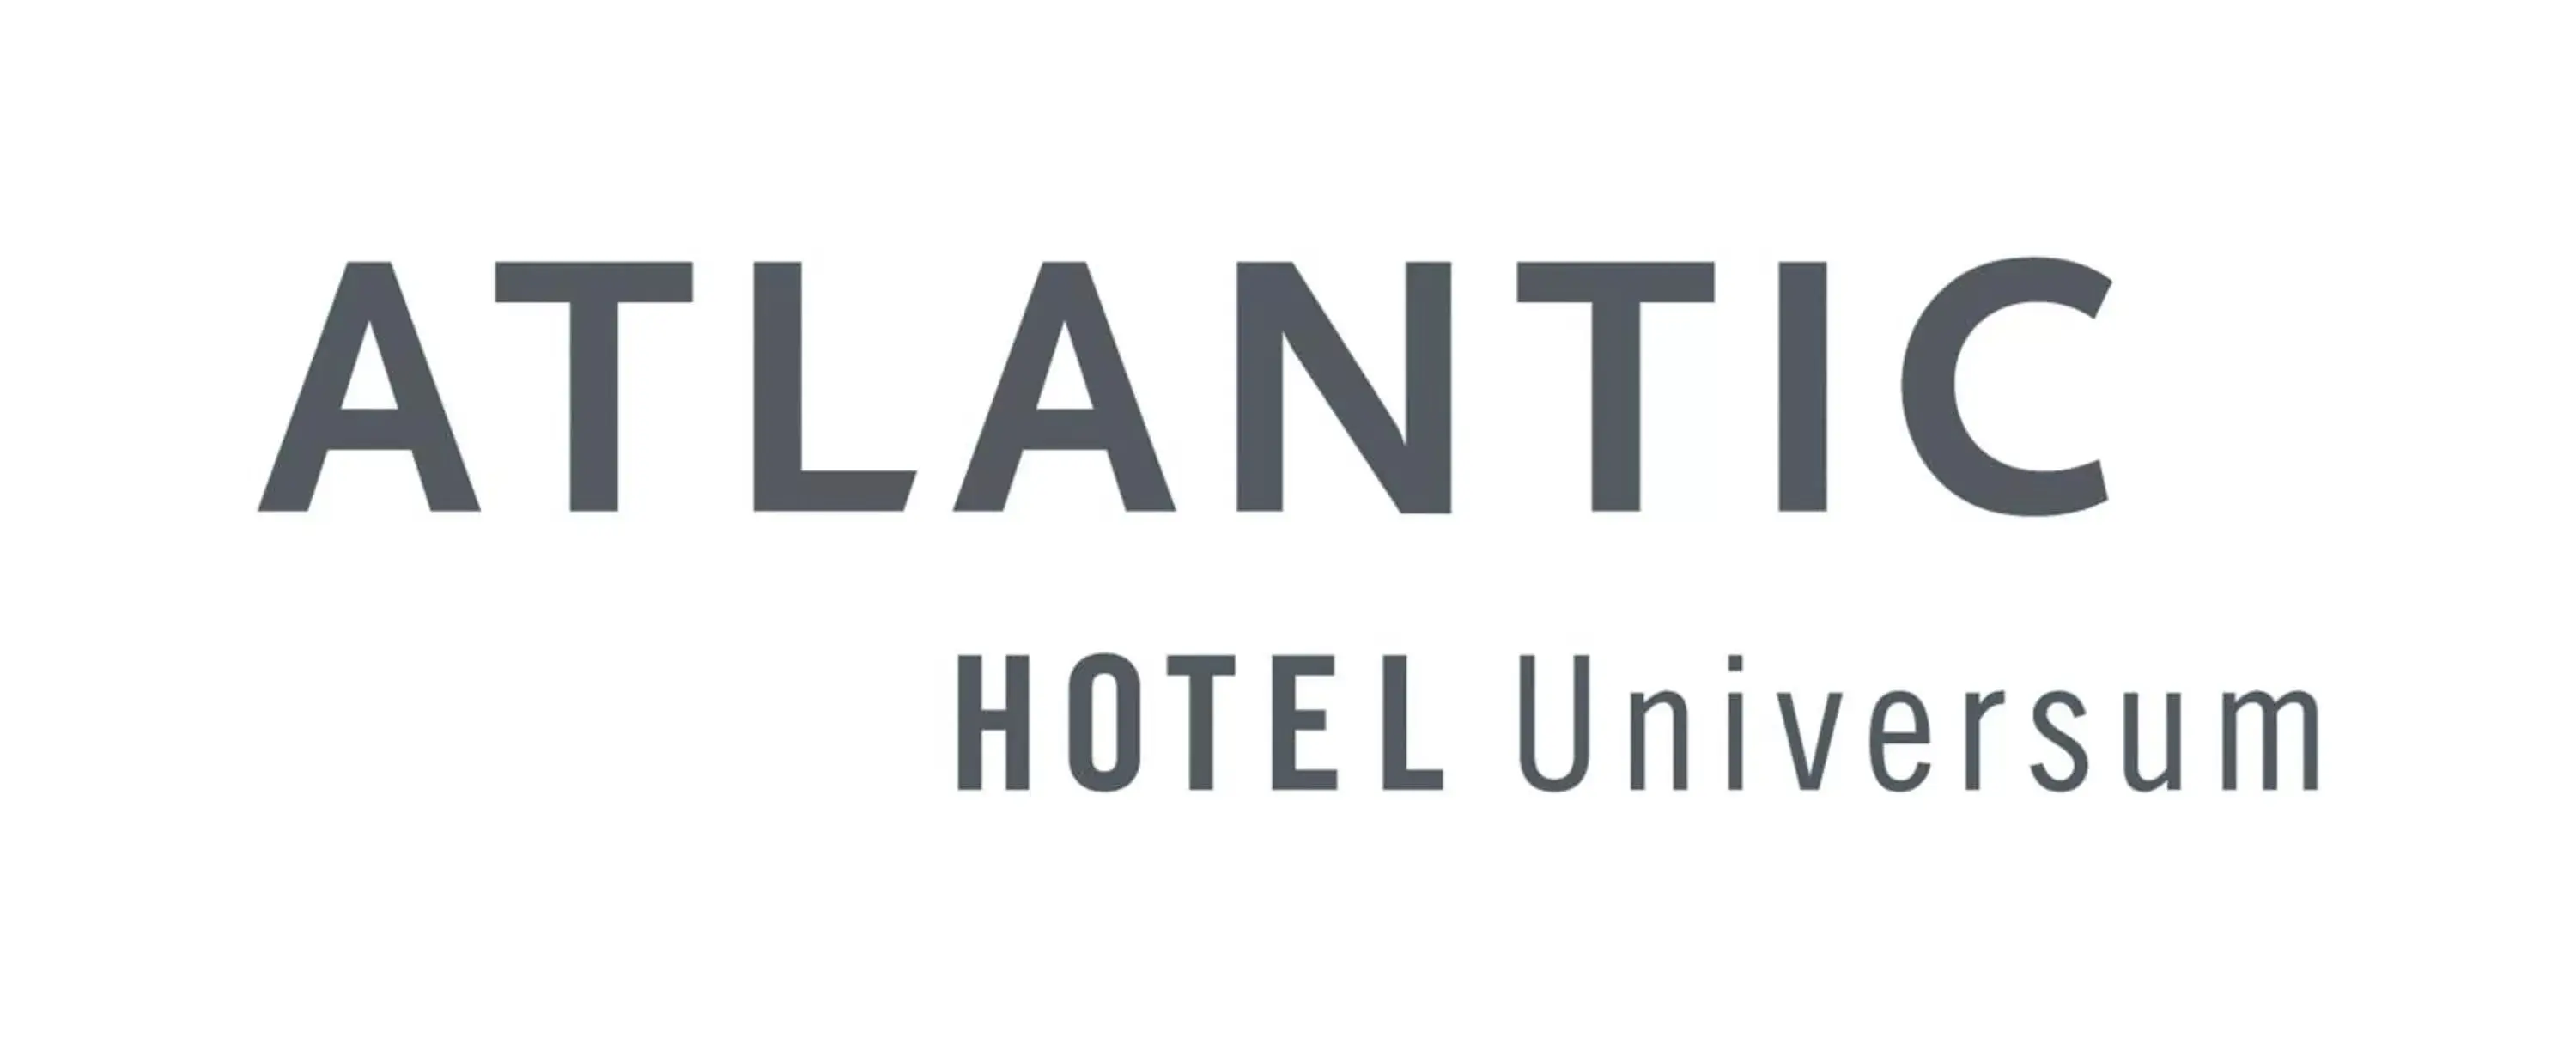 Property logo or sign in Atlantic Hotel Universum